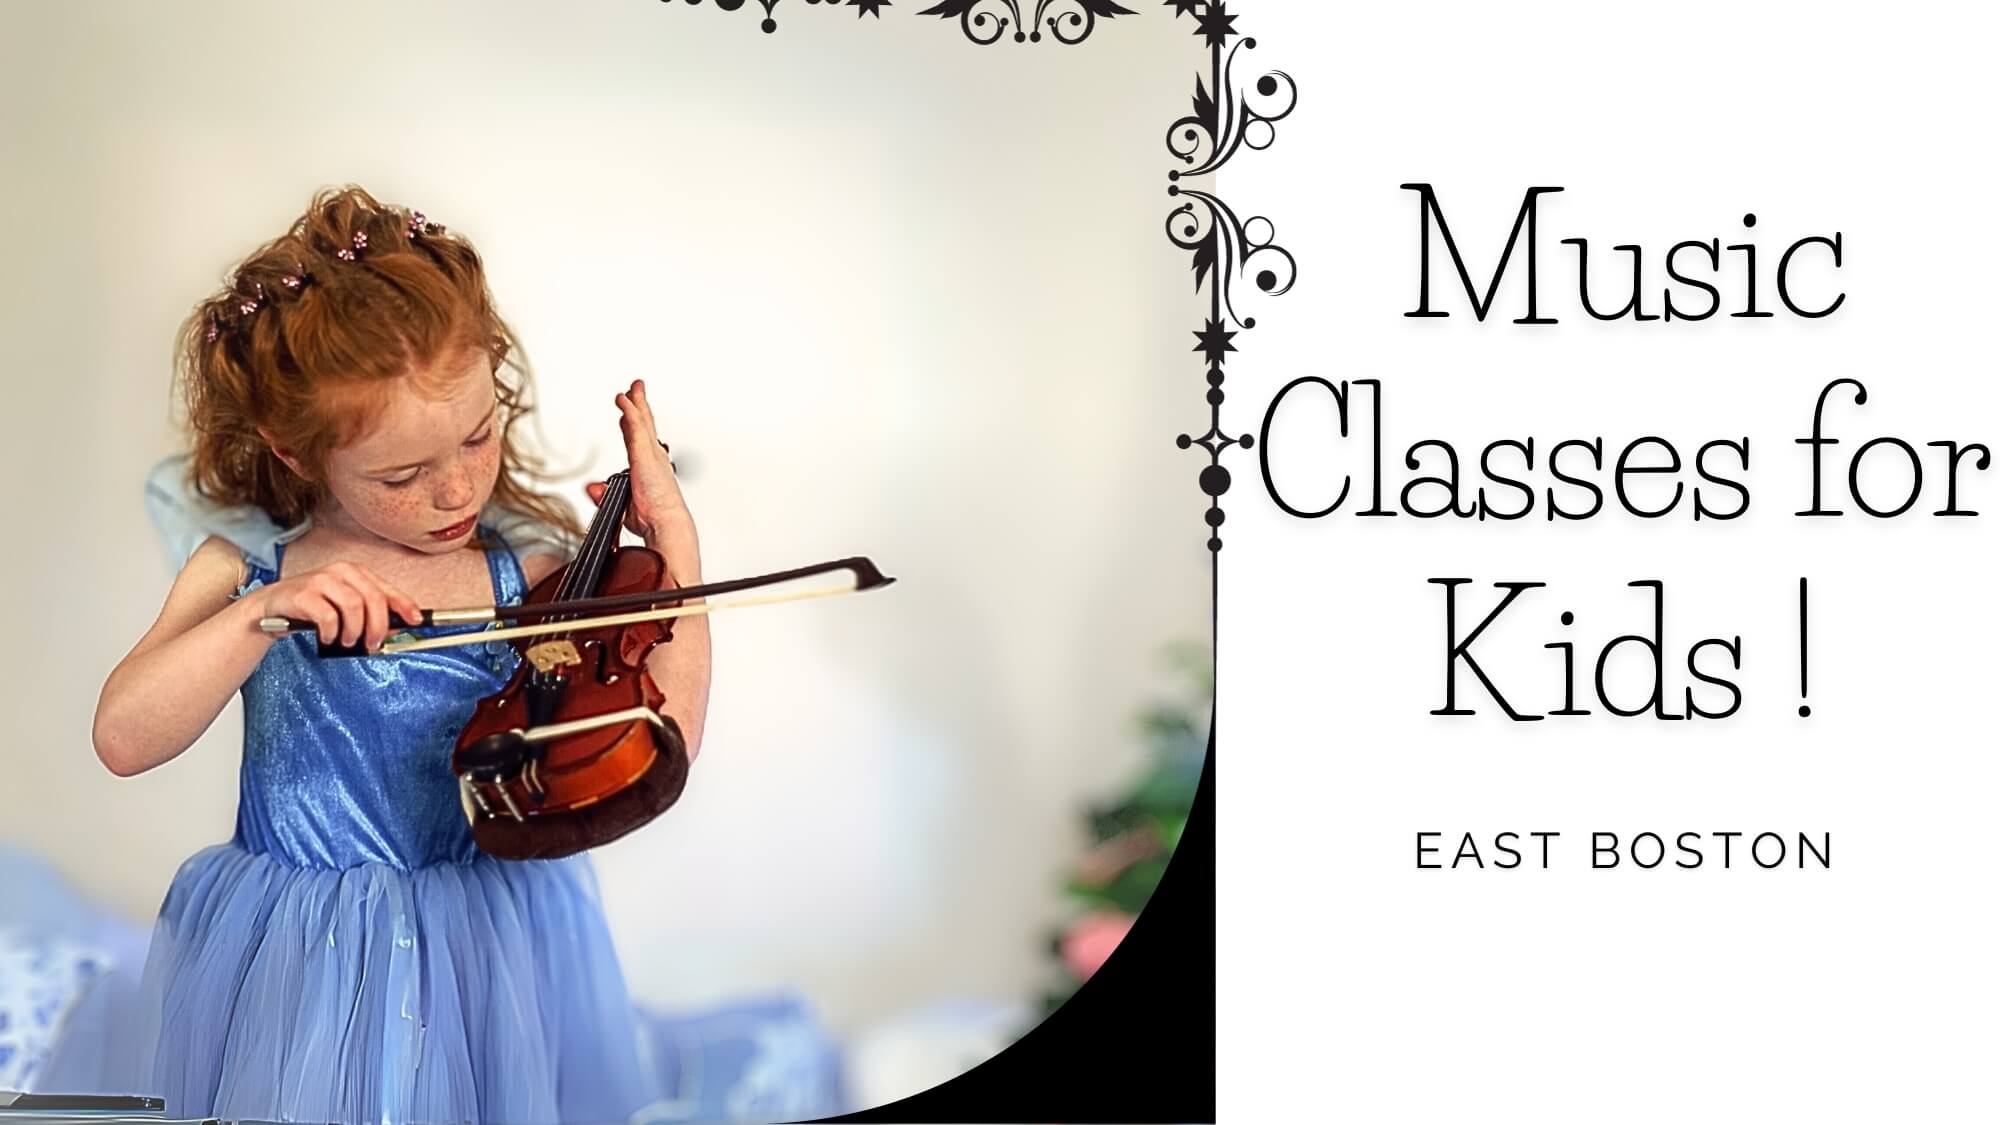 Music Classes for Kids in East Boston, Massachusetts: Enhancing Children’s Music Education at Musicians Playground